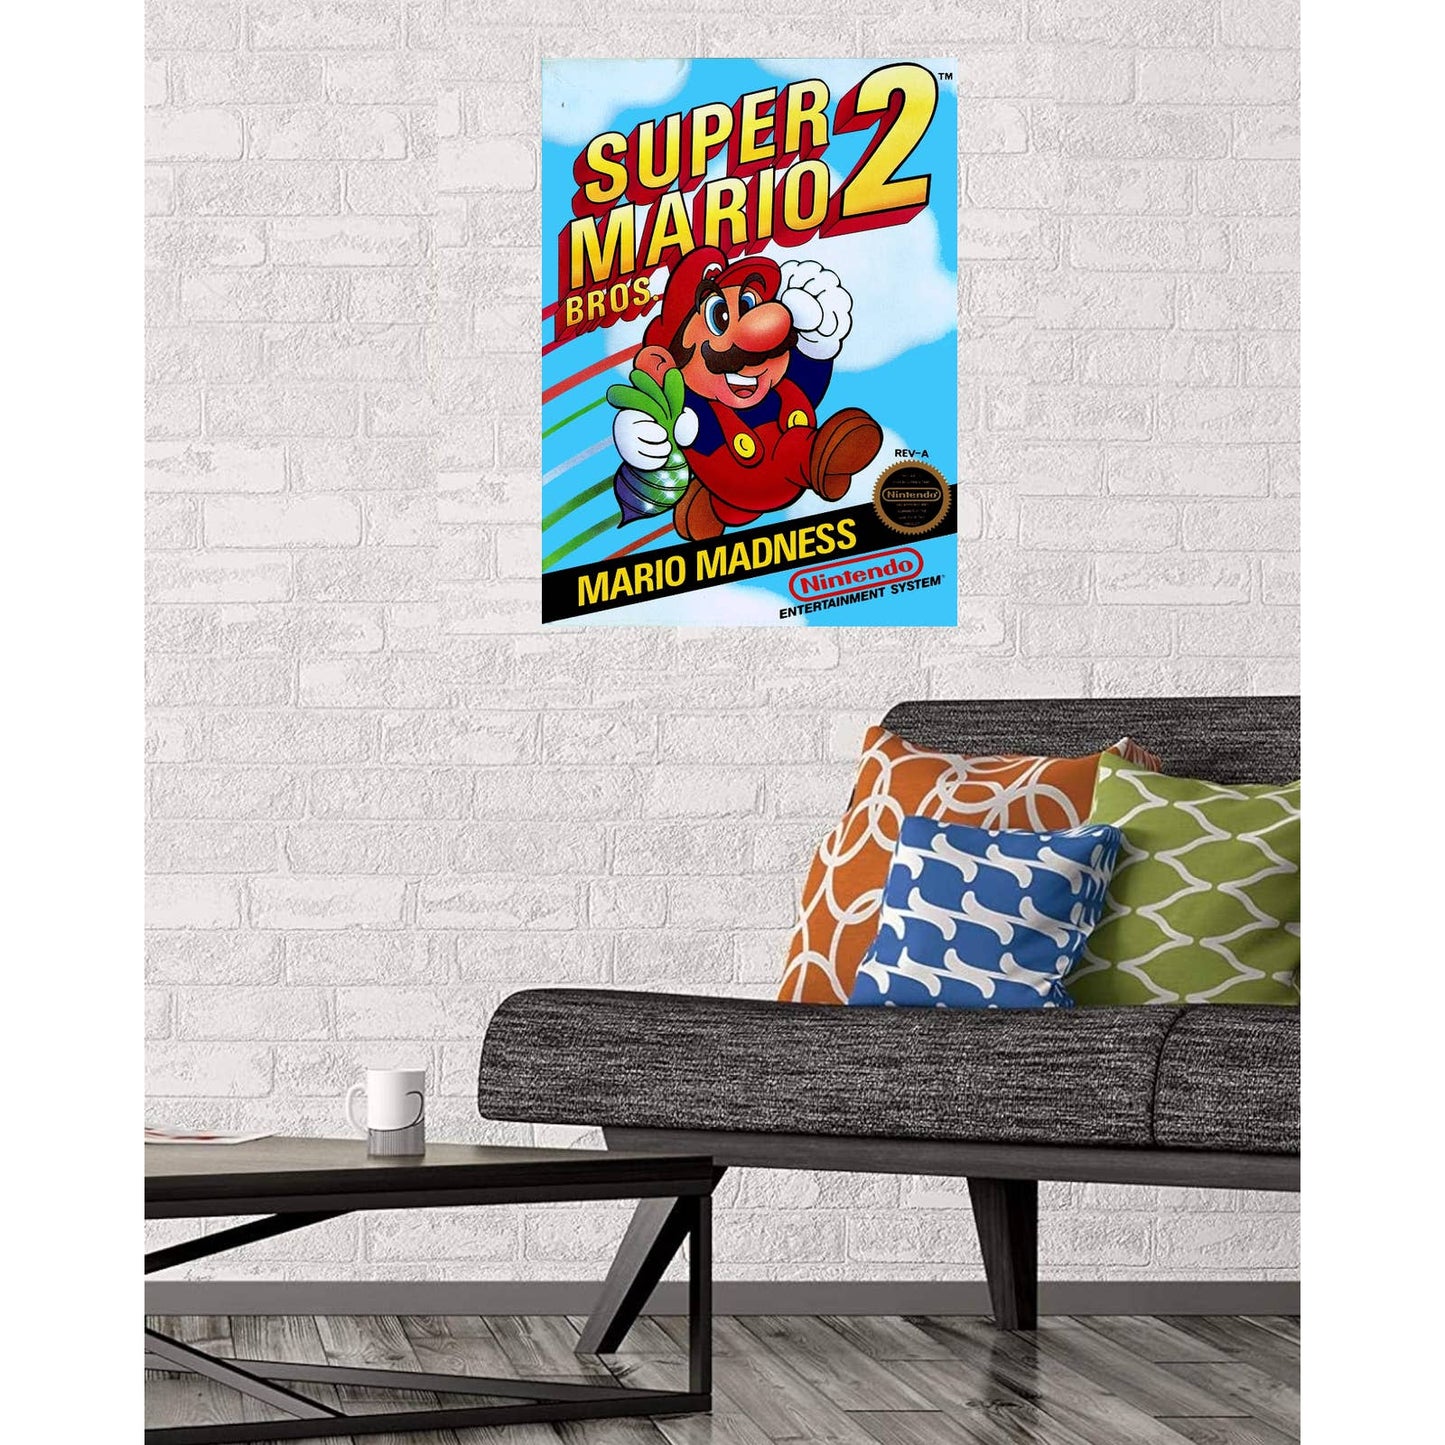 Super Mario Bros 2 Video Game Poster Print Wall Art 16"x24"